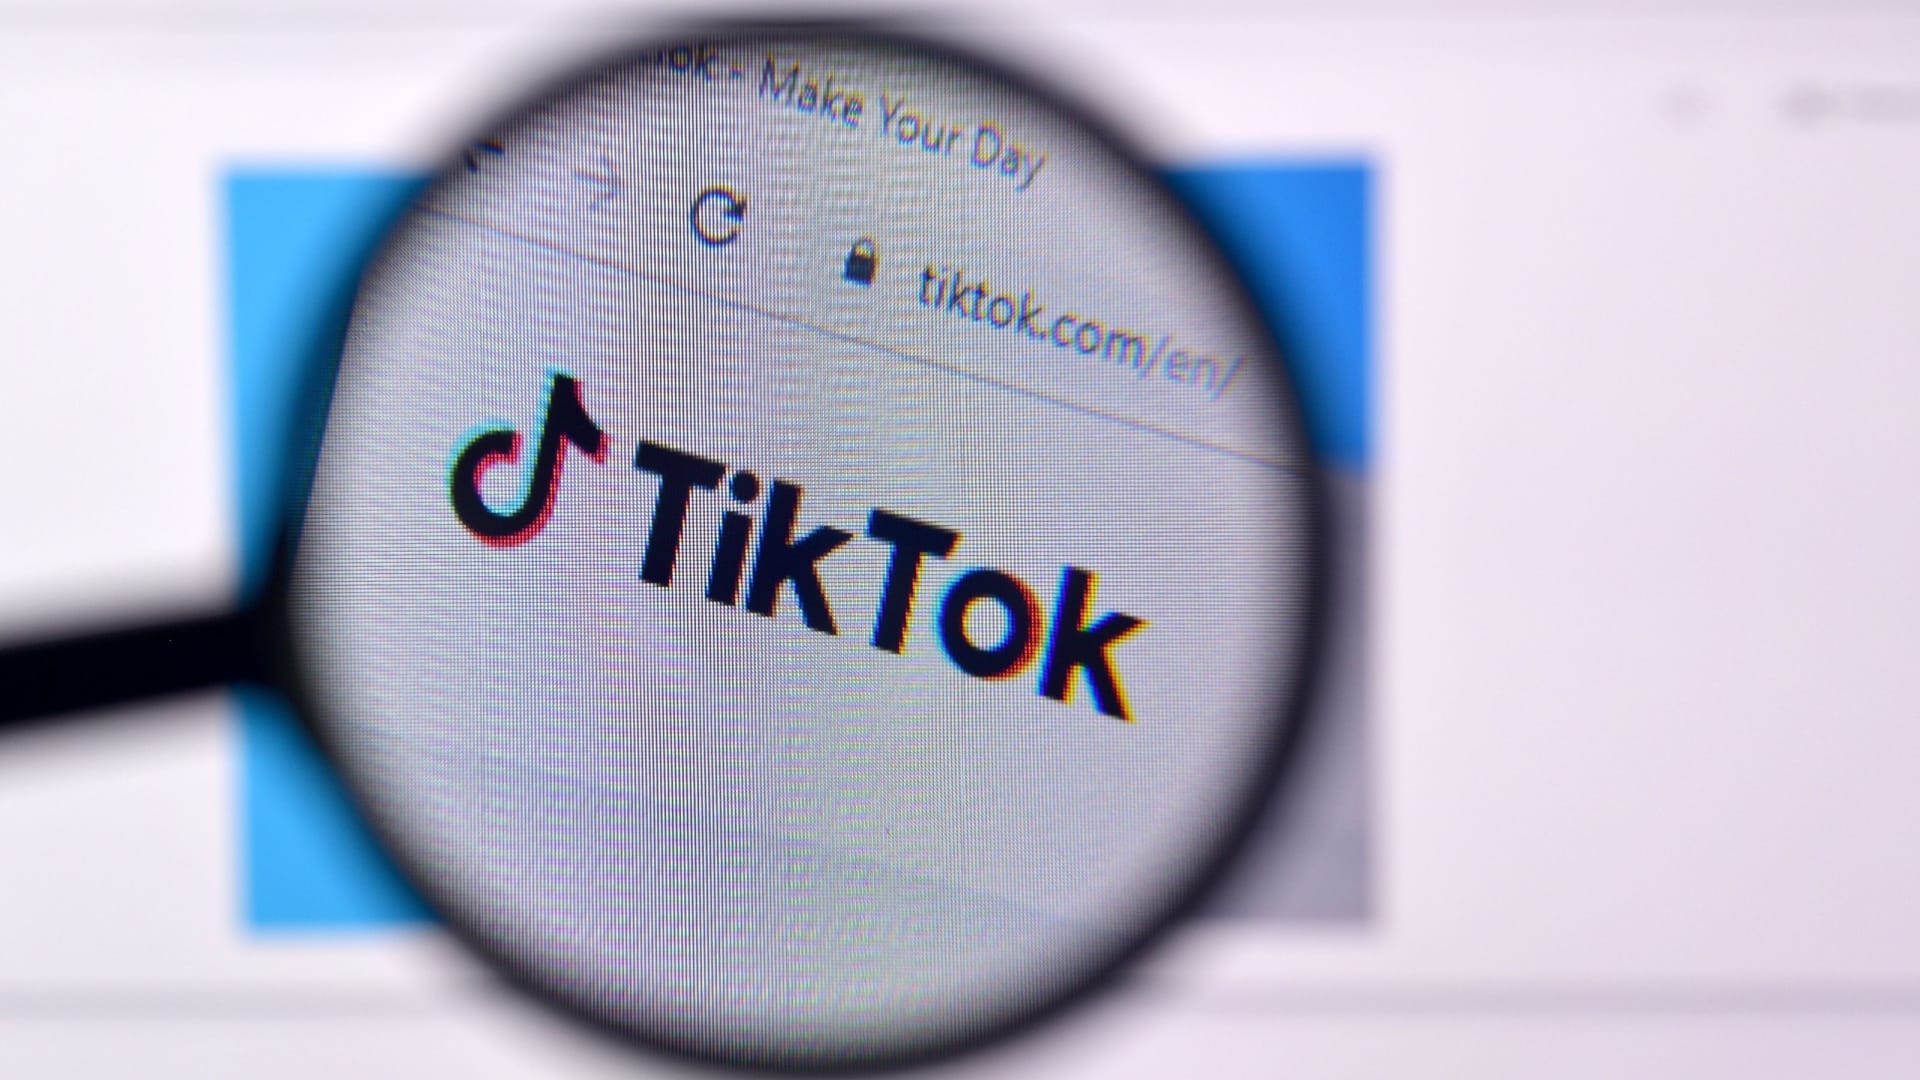 51% of Gen Z choose TikTok, not Google, for search